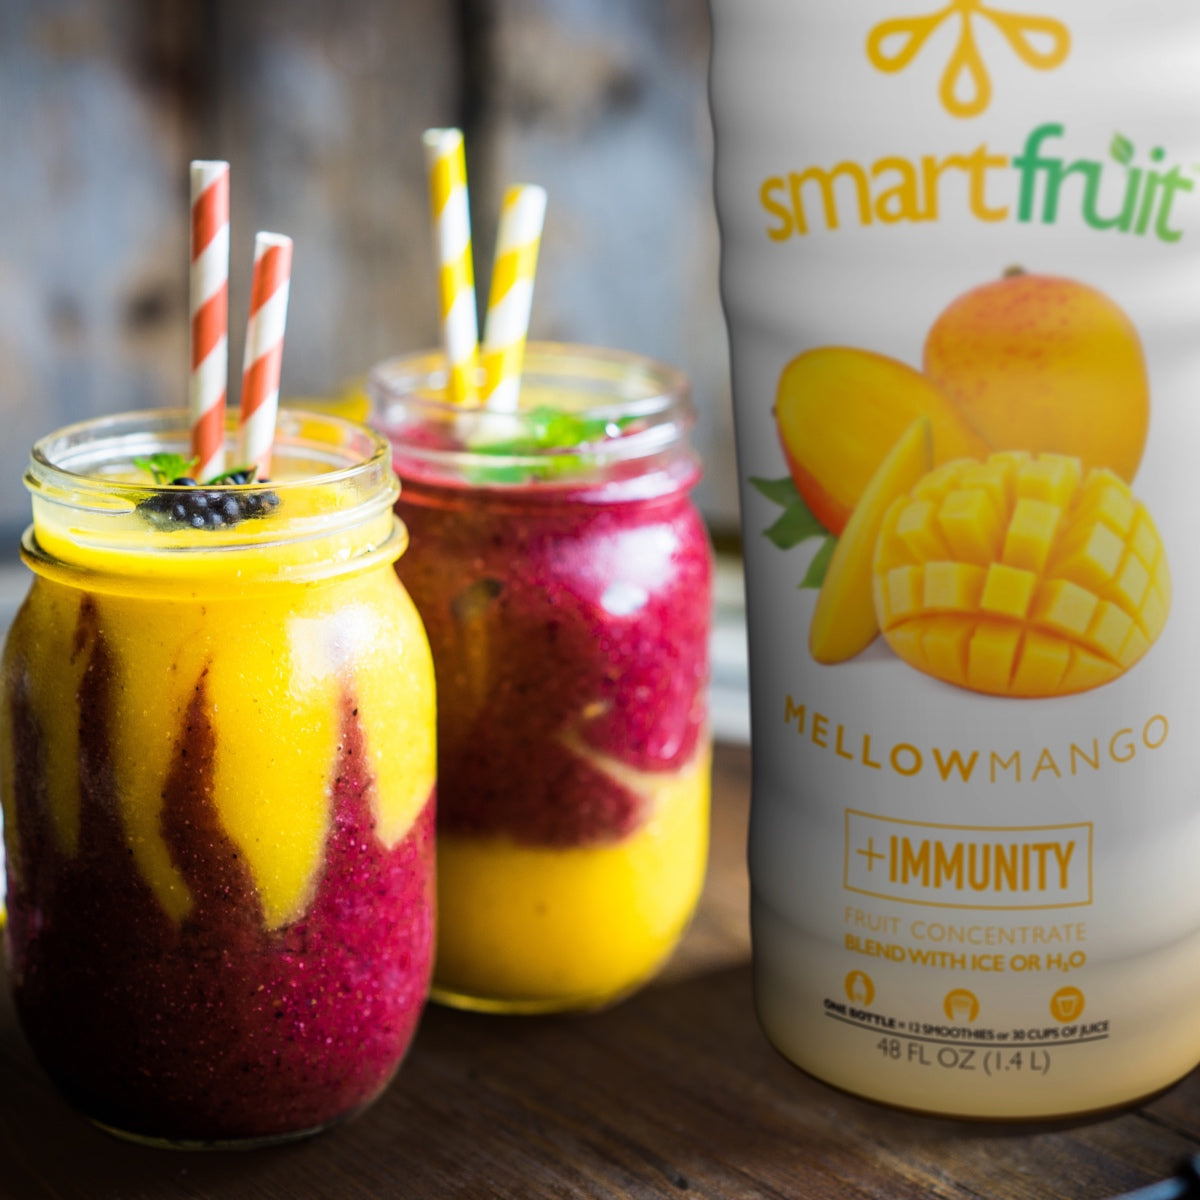 SmartFruit - 100% Real Fruit Puree: 48 fl. oz. Bottle: Mellow Mango